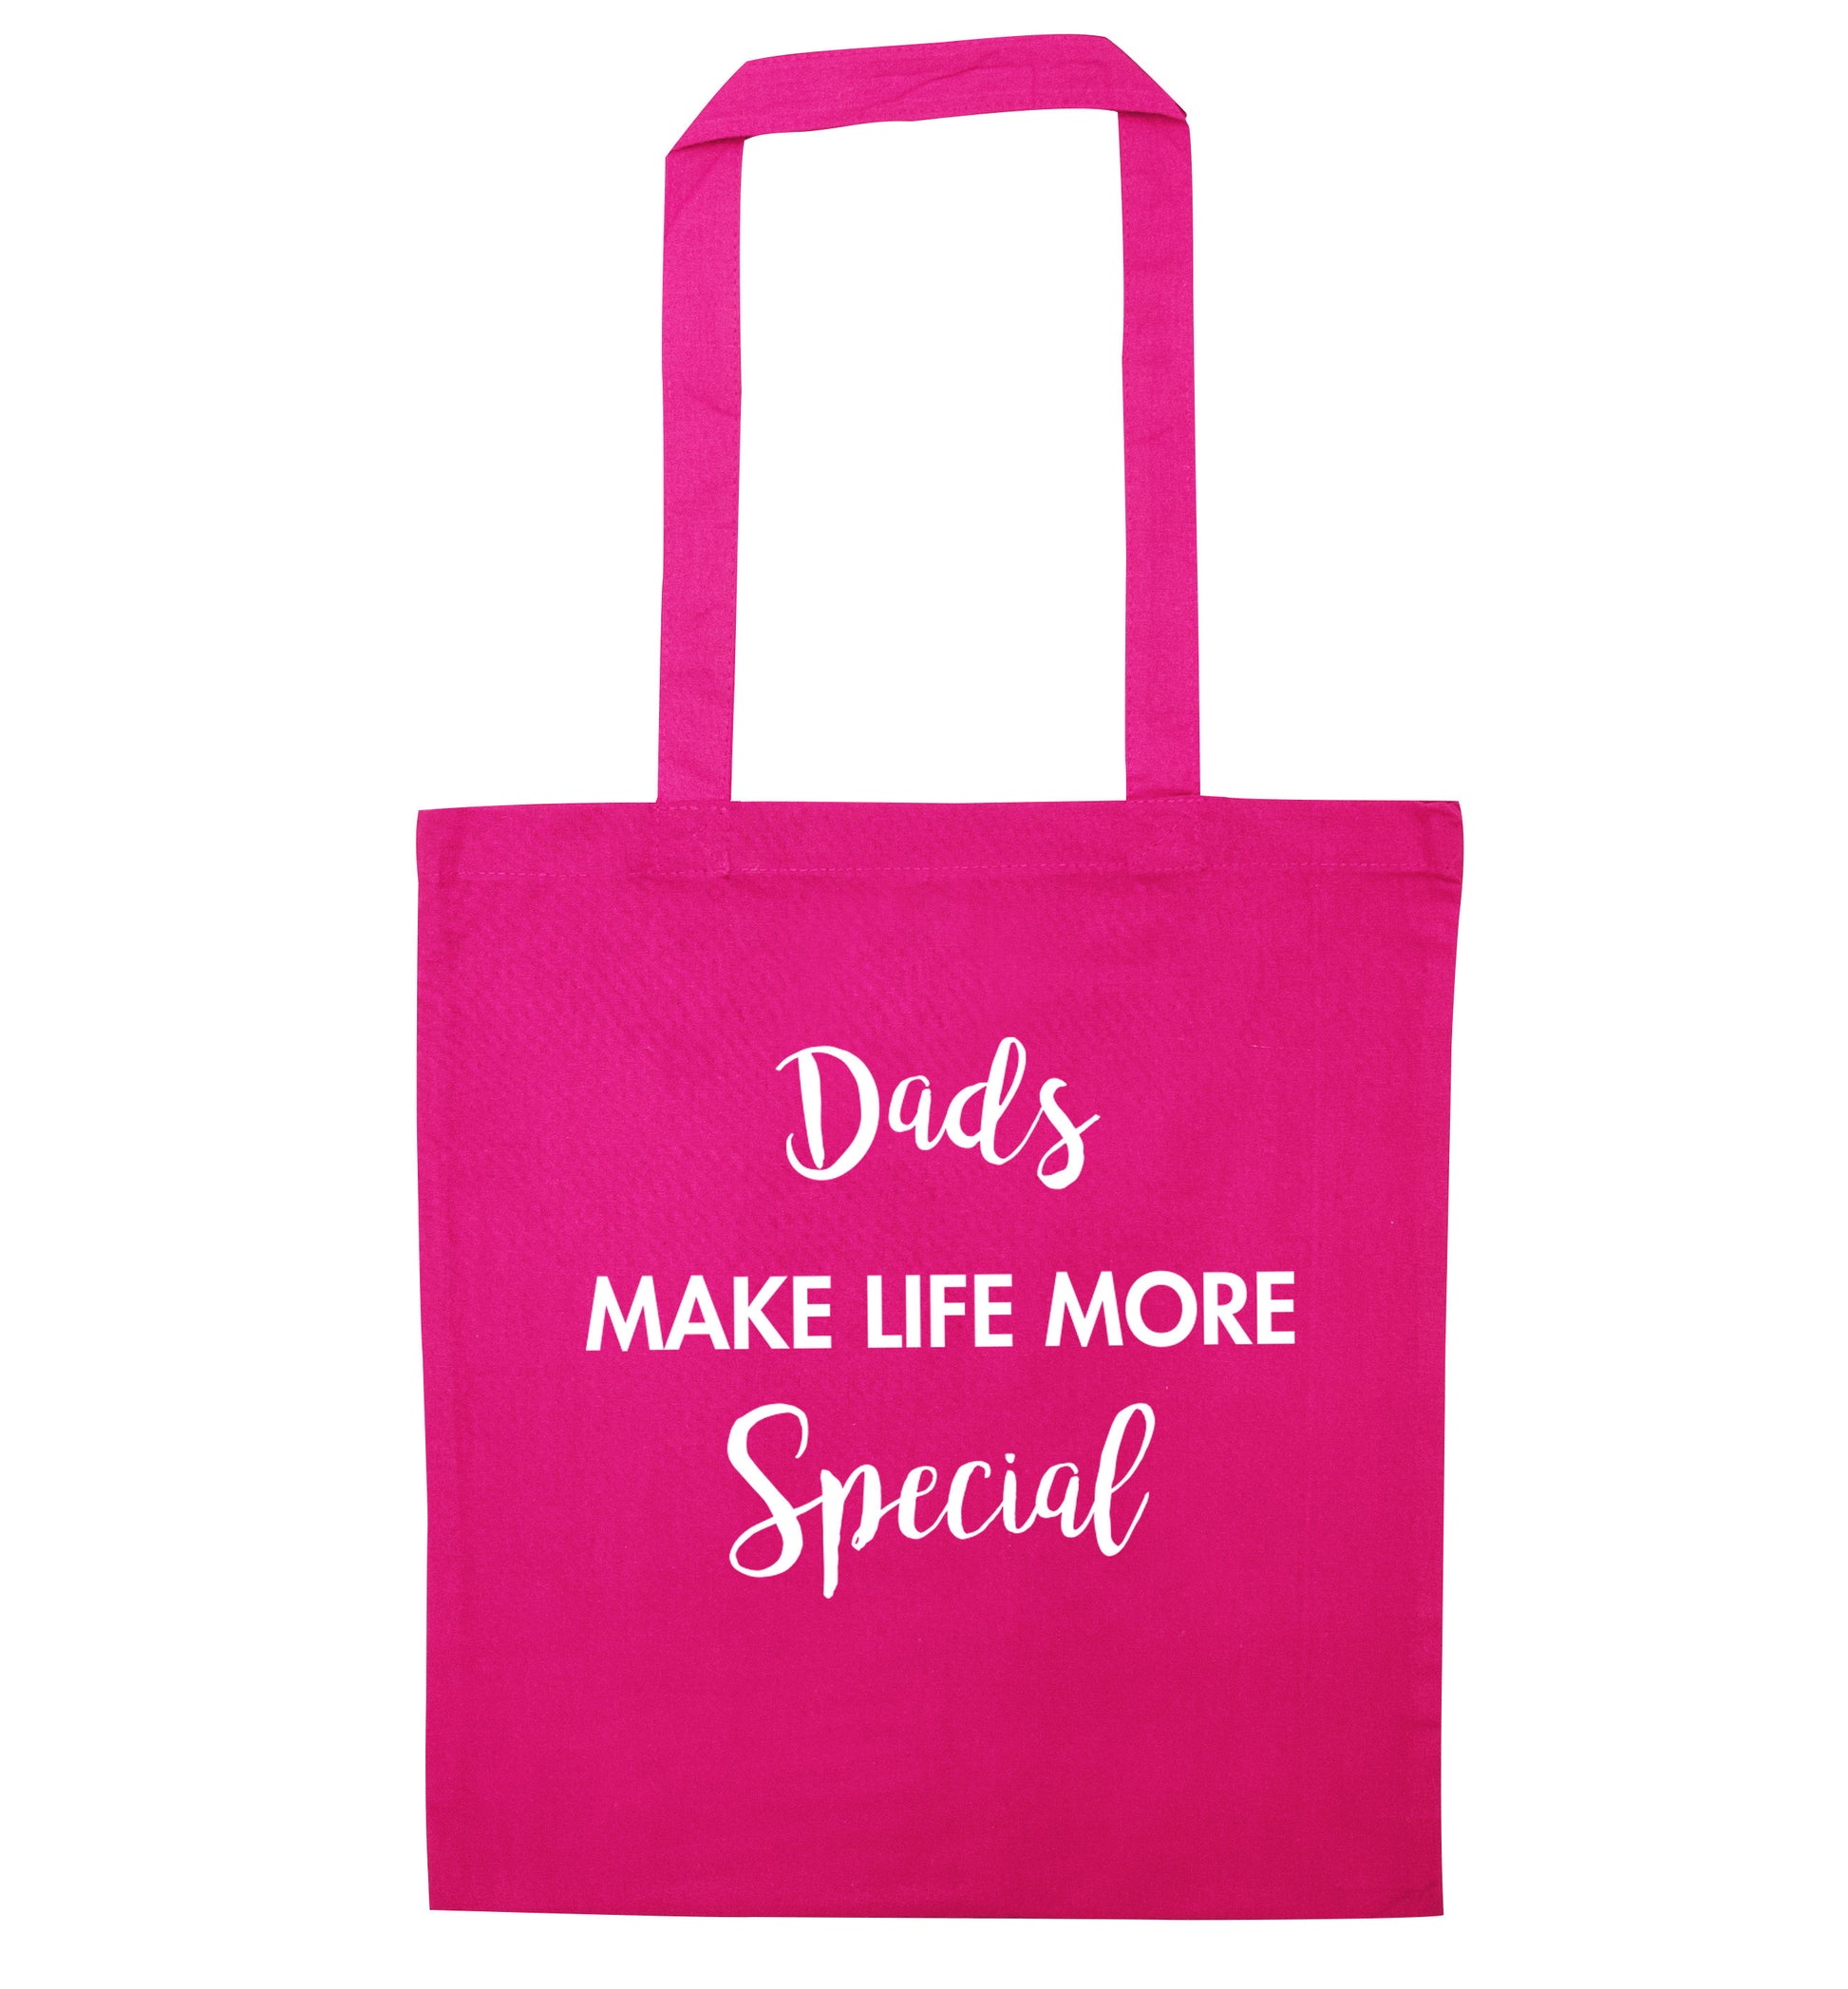 Dads make life more special pink tote bag